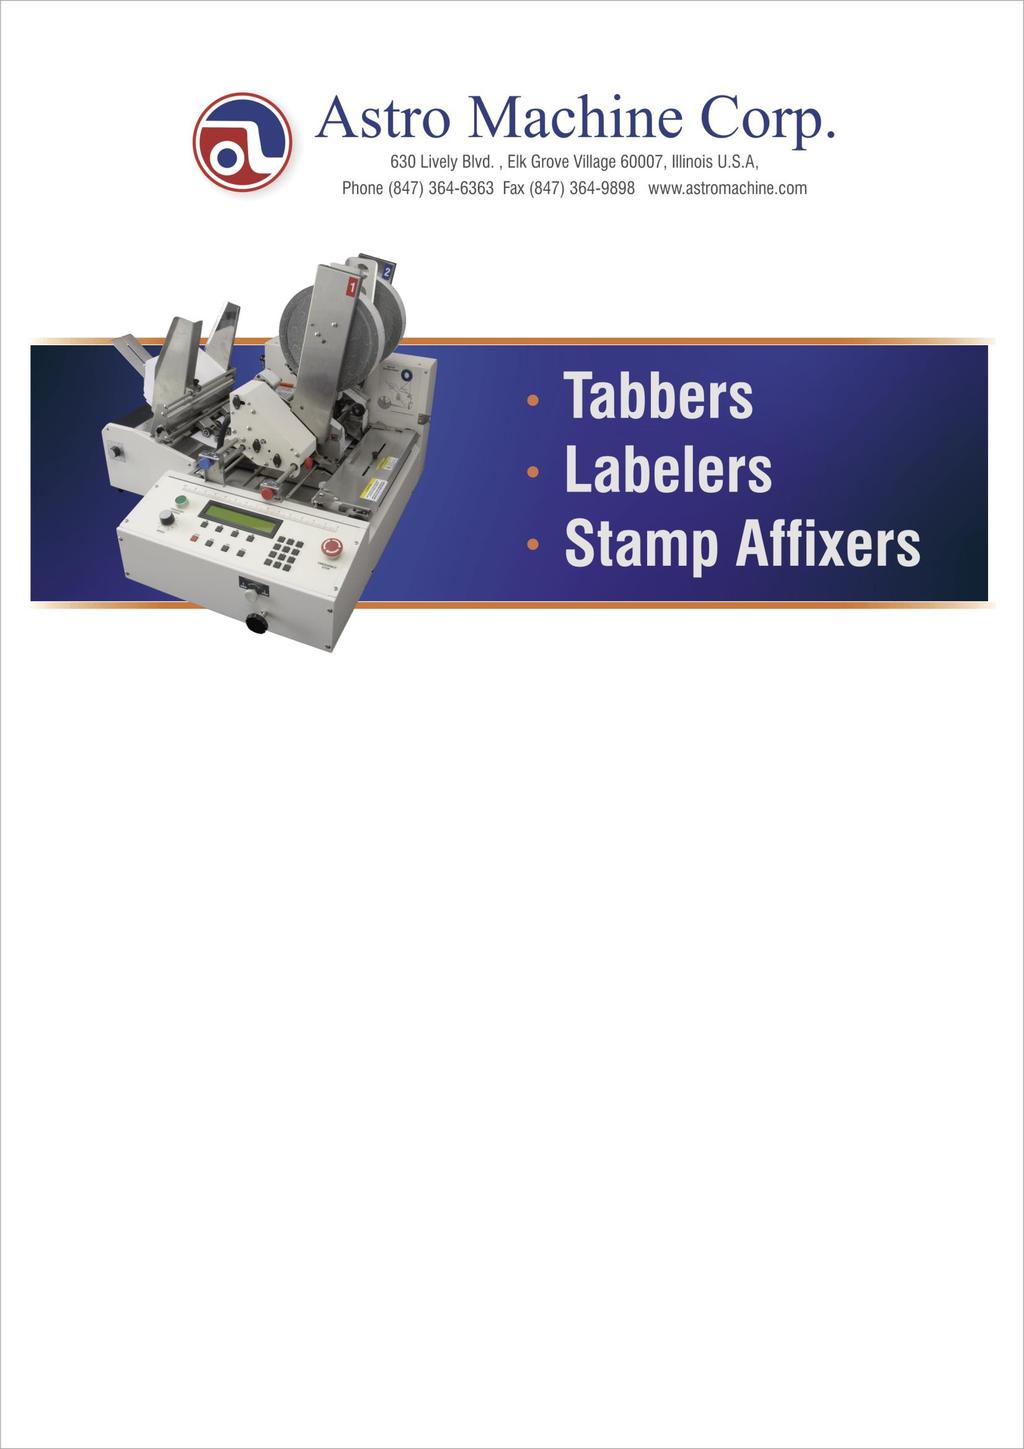 ATS-12 Desktop Tabber ATS-8900 Multiple Tabber/Stamp Affixer ATS-9600/9700 Tabber/Labeler/Stamp Affixer